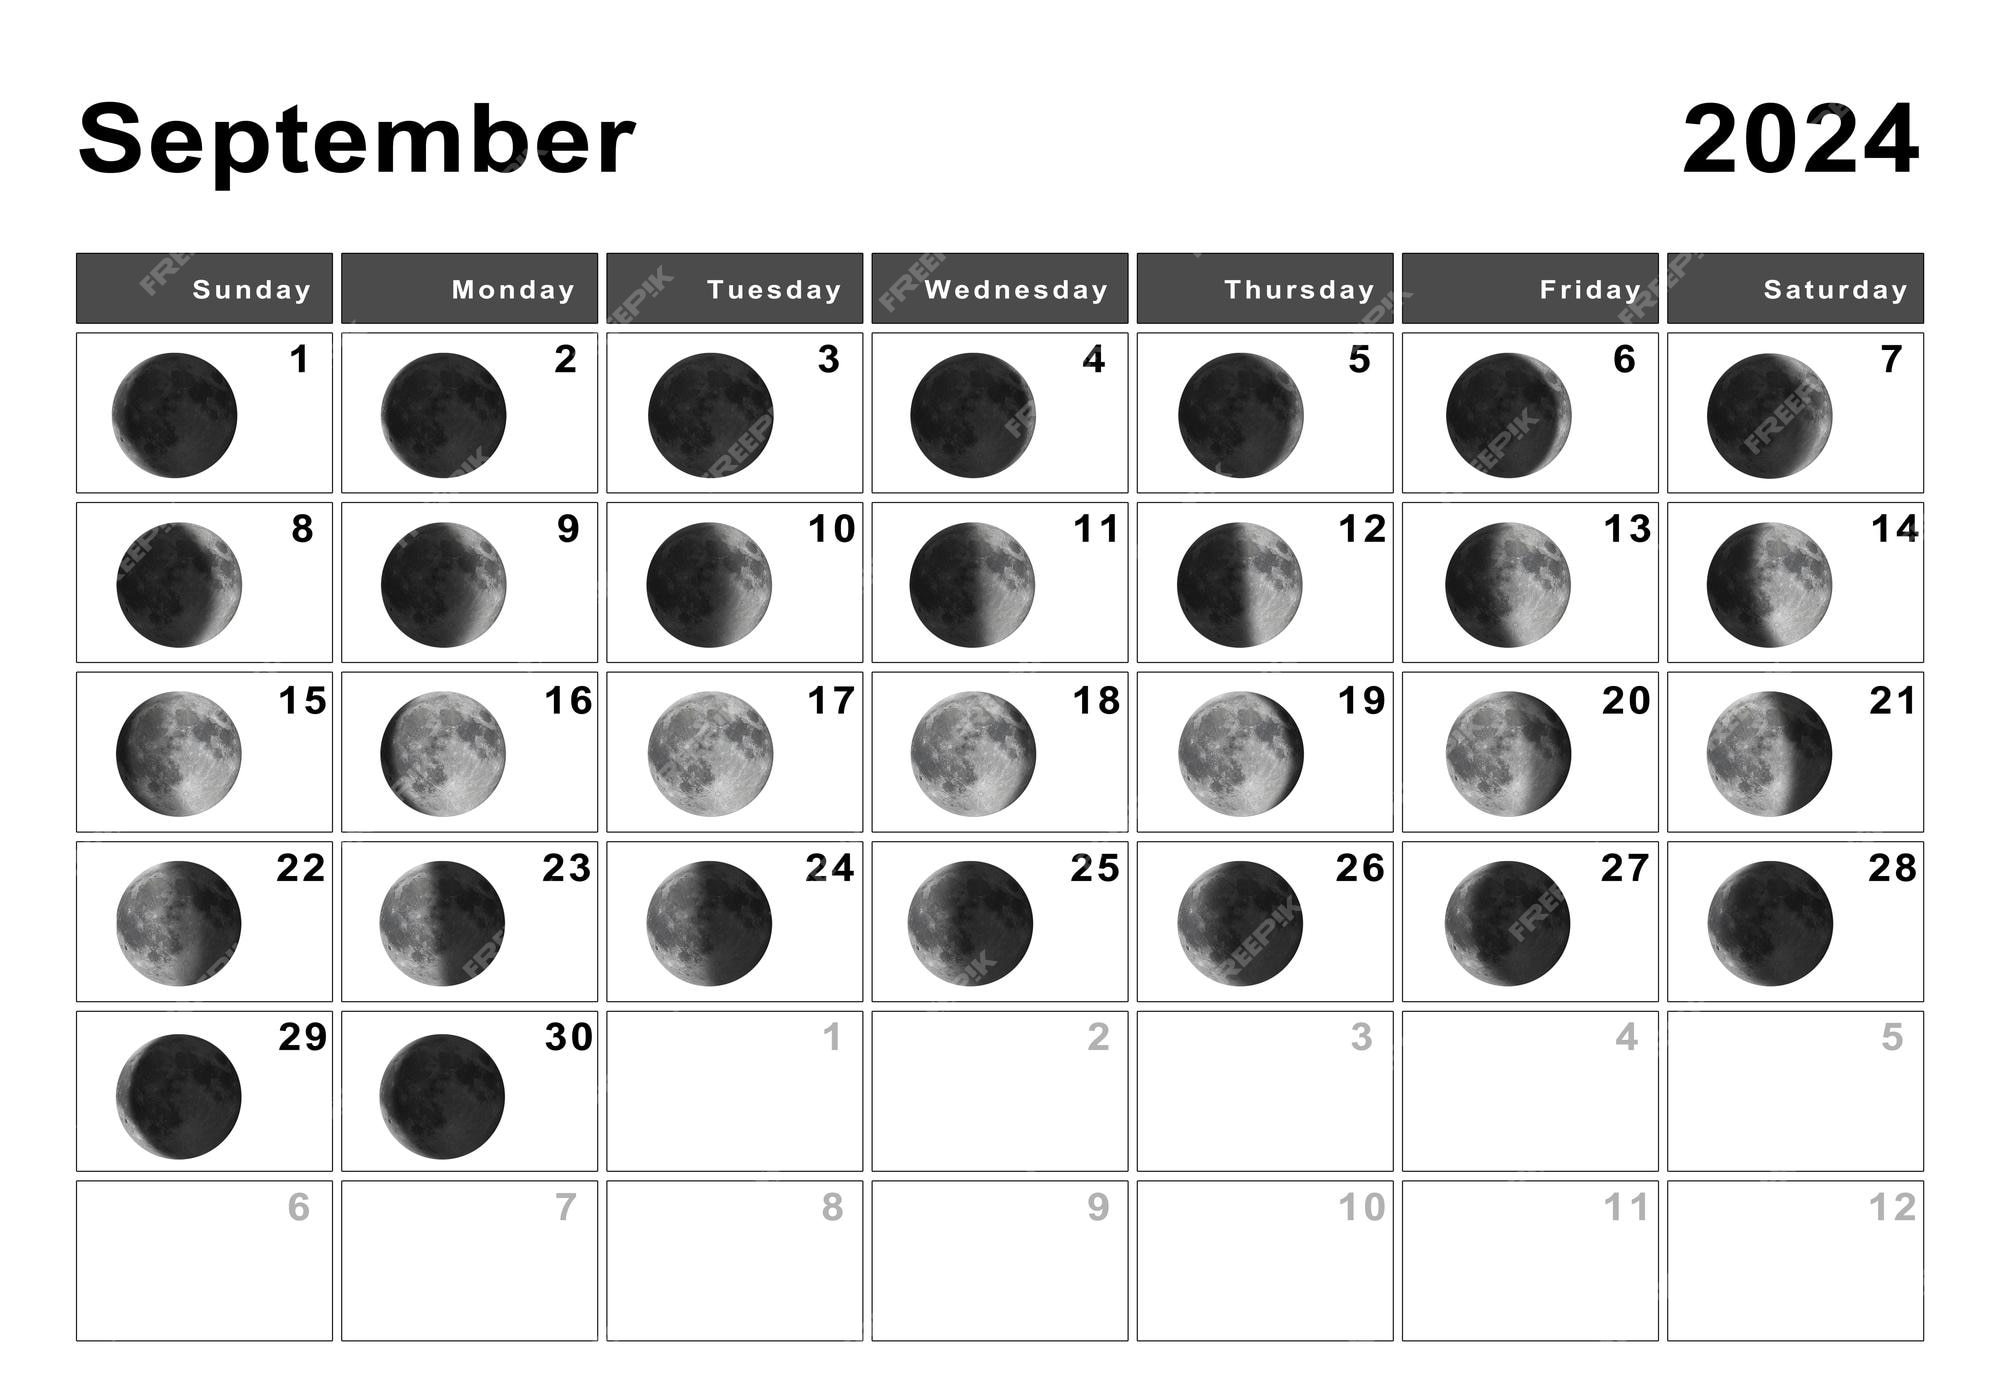 Septiembre 2024 calendario lunar, ciclos lunares, fases lunares Foto